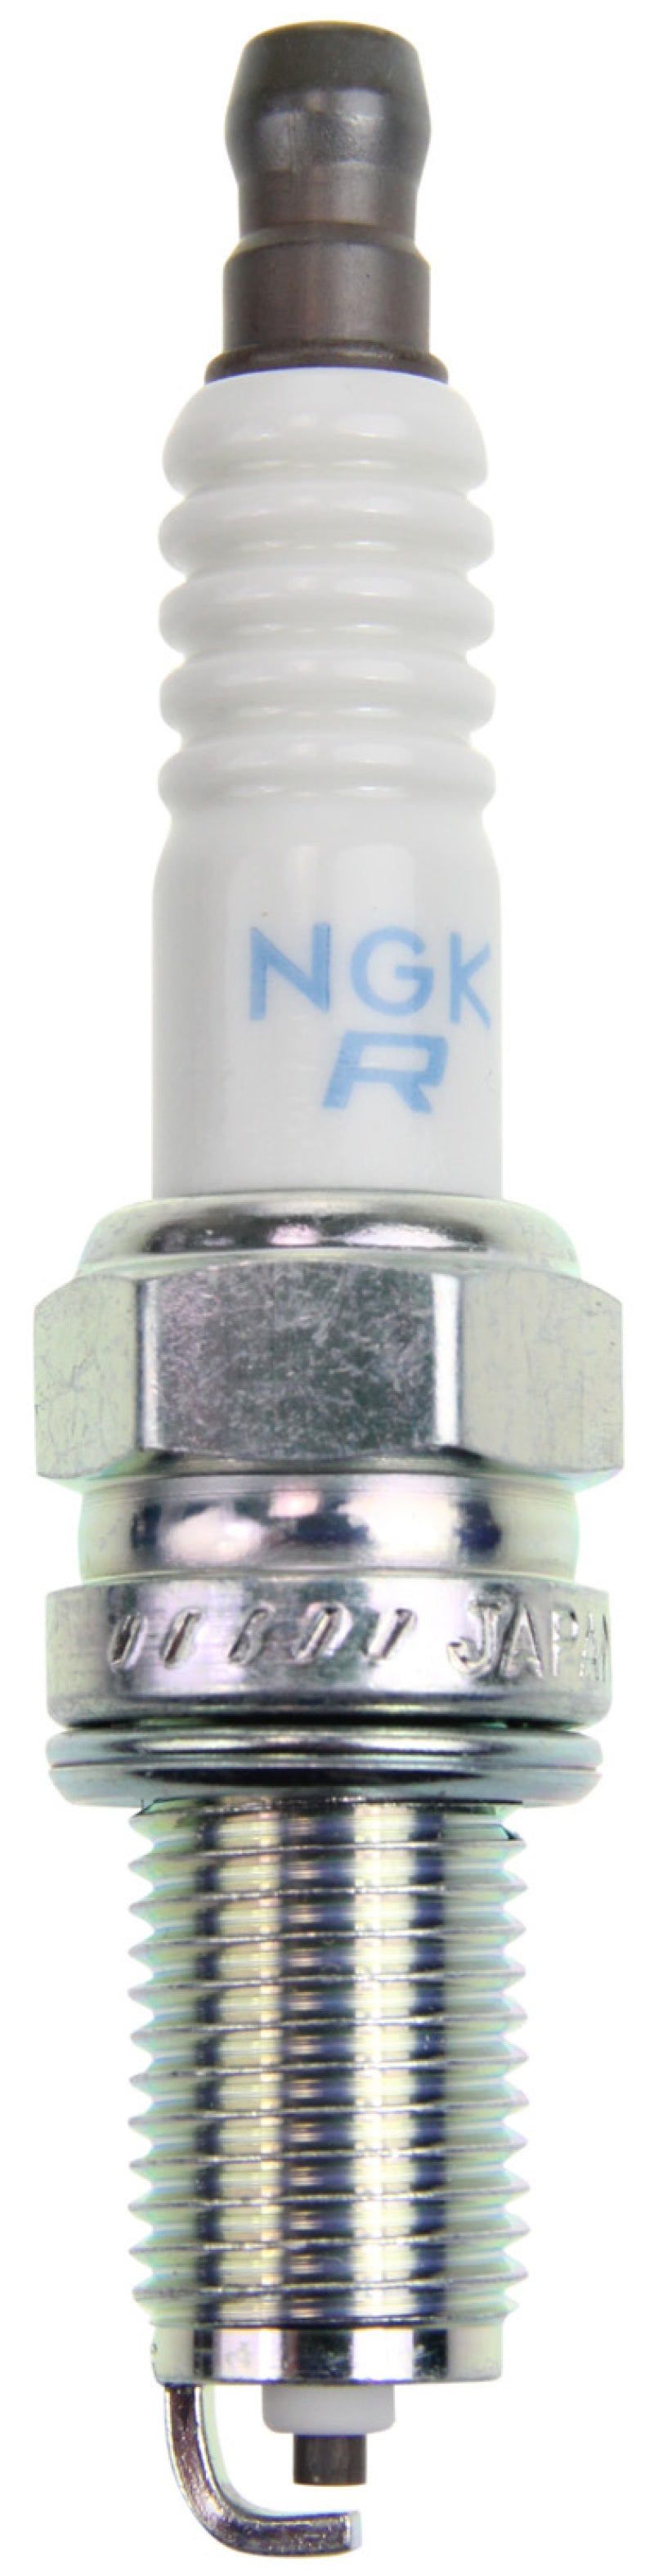 NGK Standard Spark Plug Box of 4 (KR9E-G) -  Shop now at Performance Car Parts